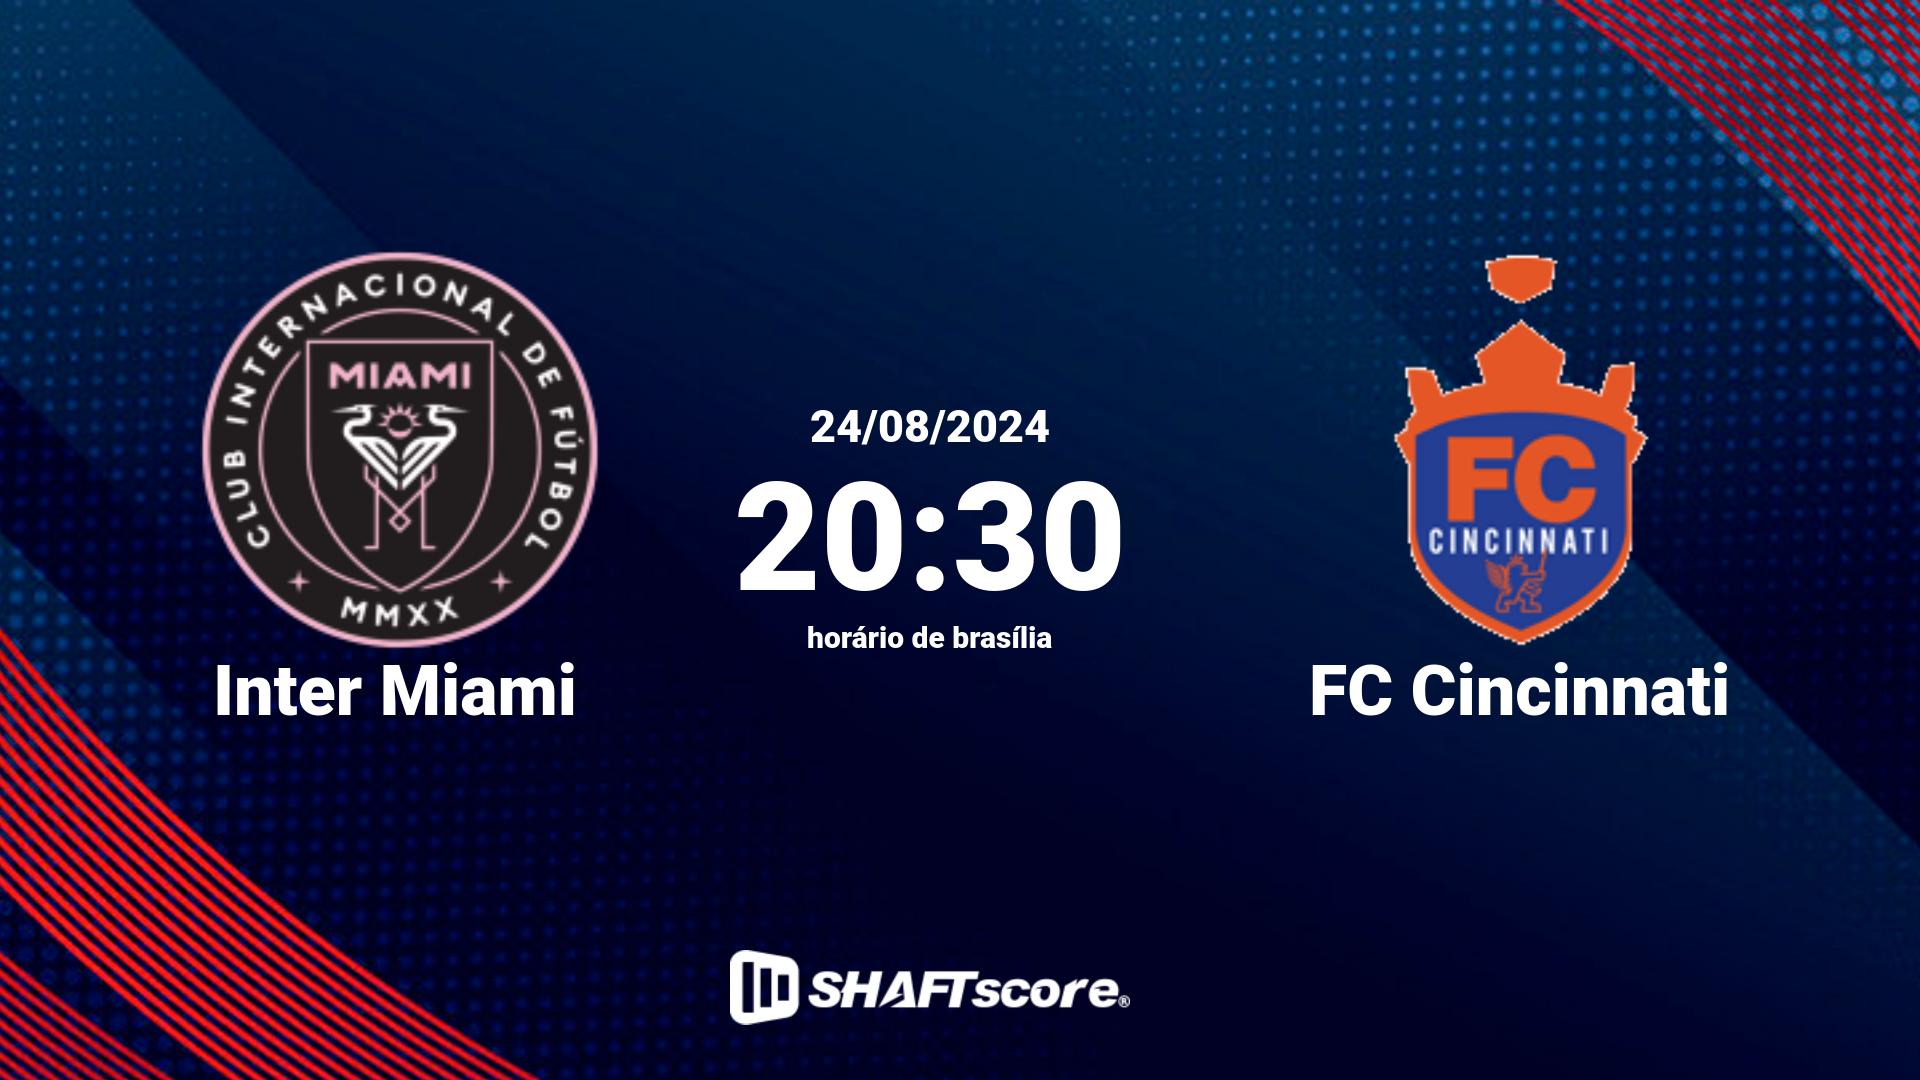 Estatísticas do jogo Inter Miami vs FC Cincinnati 24.08 20:30